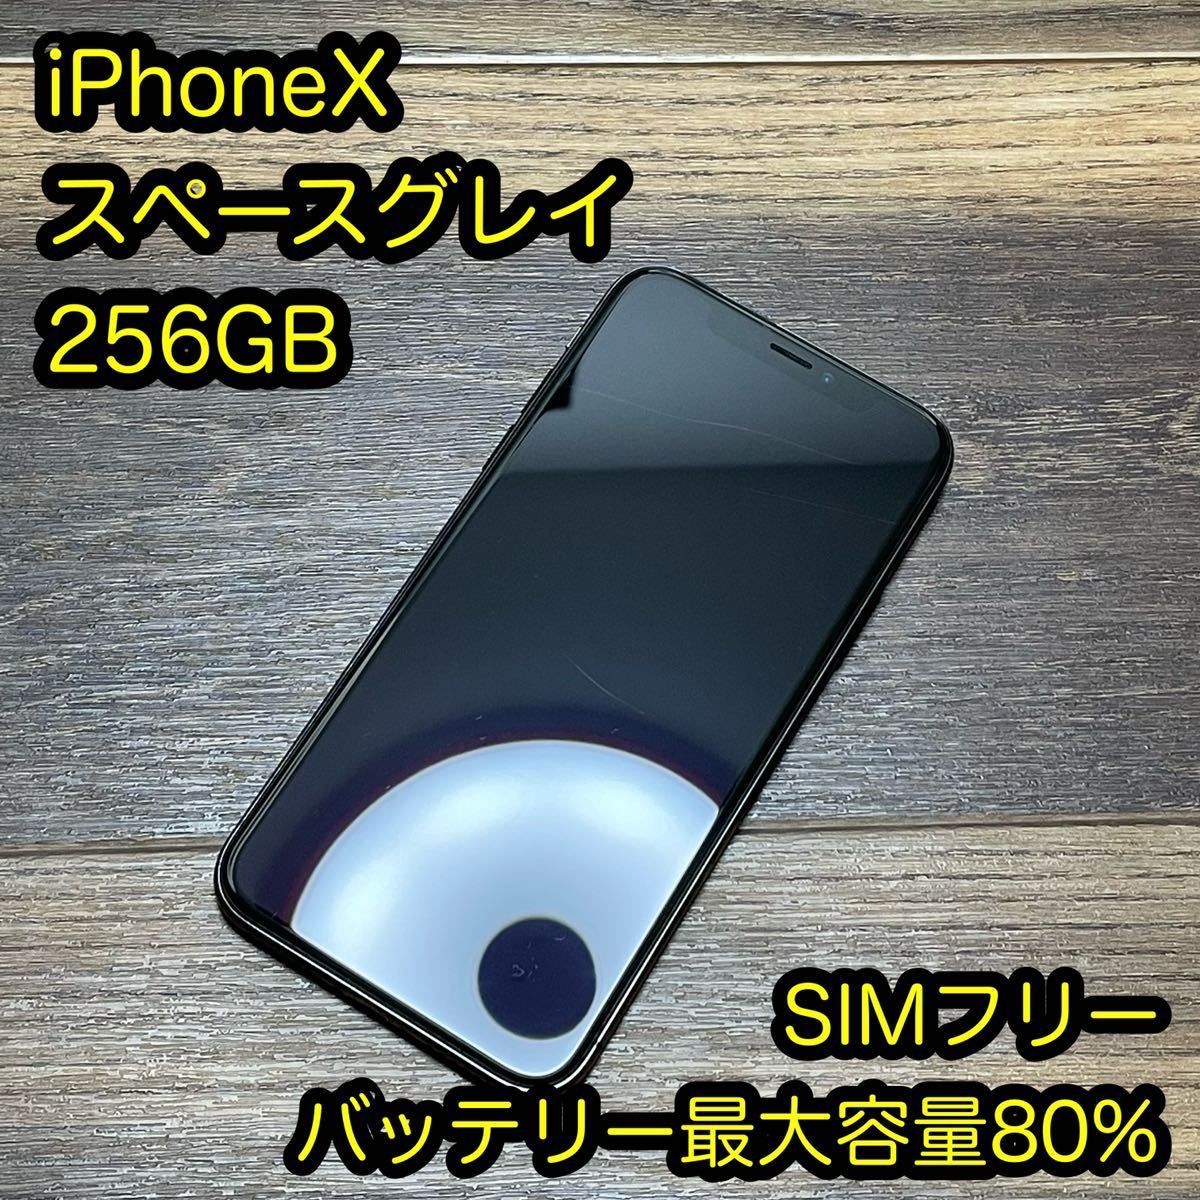 iPhone X 256GB SiMフリー スペースグレイ バッテリー80% iPhoneX SIM